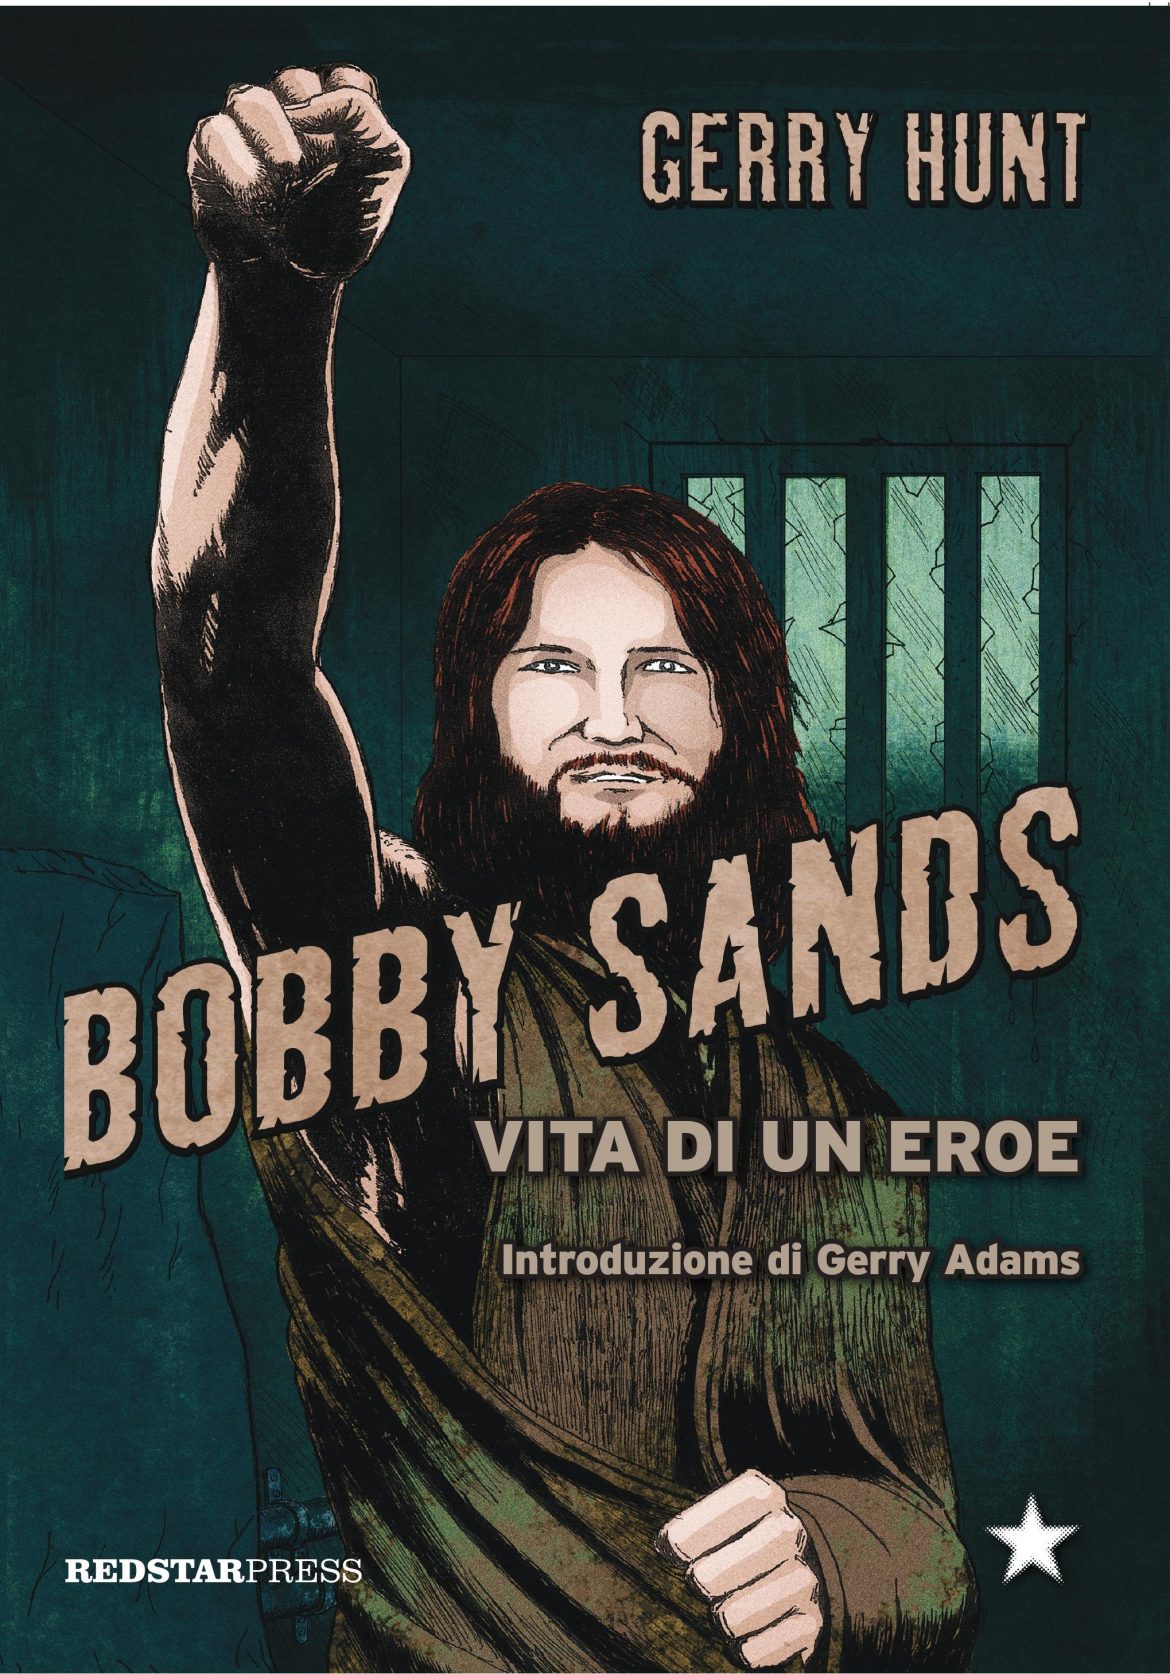 Recensione di Bobby Sands, Vita Di Un Eroe – Gerry Hunt